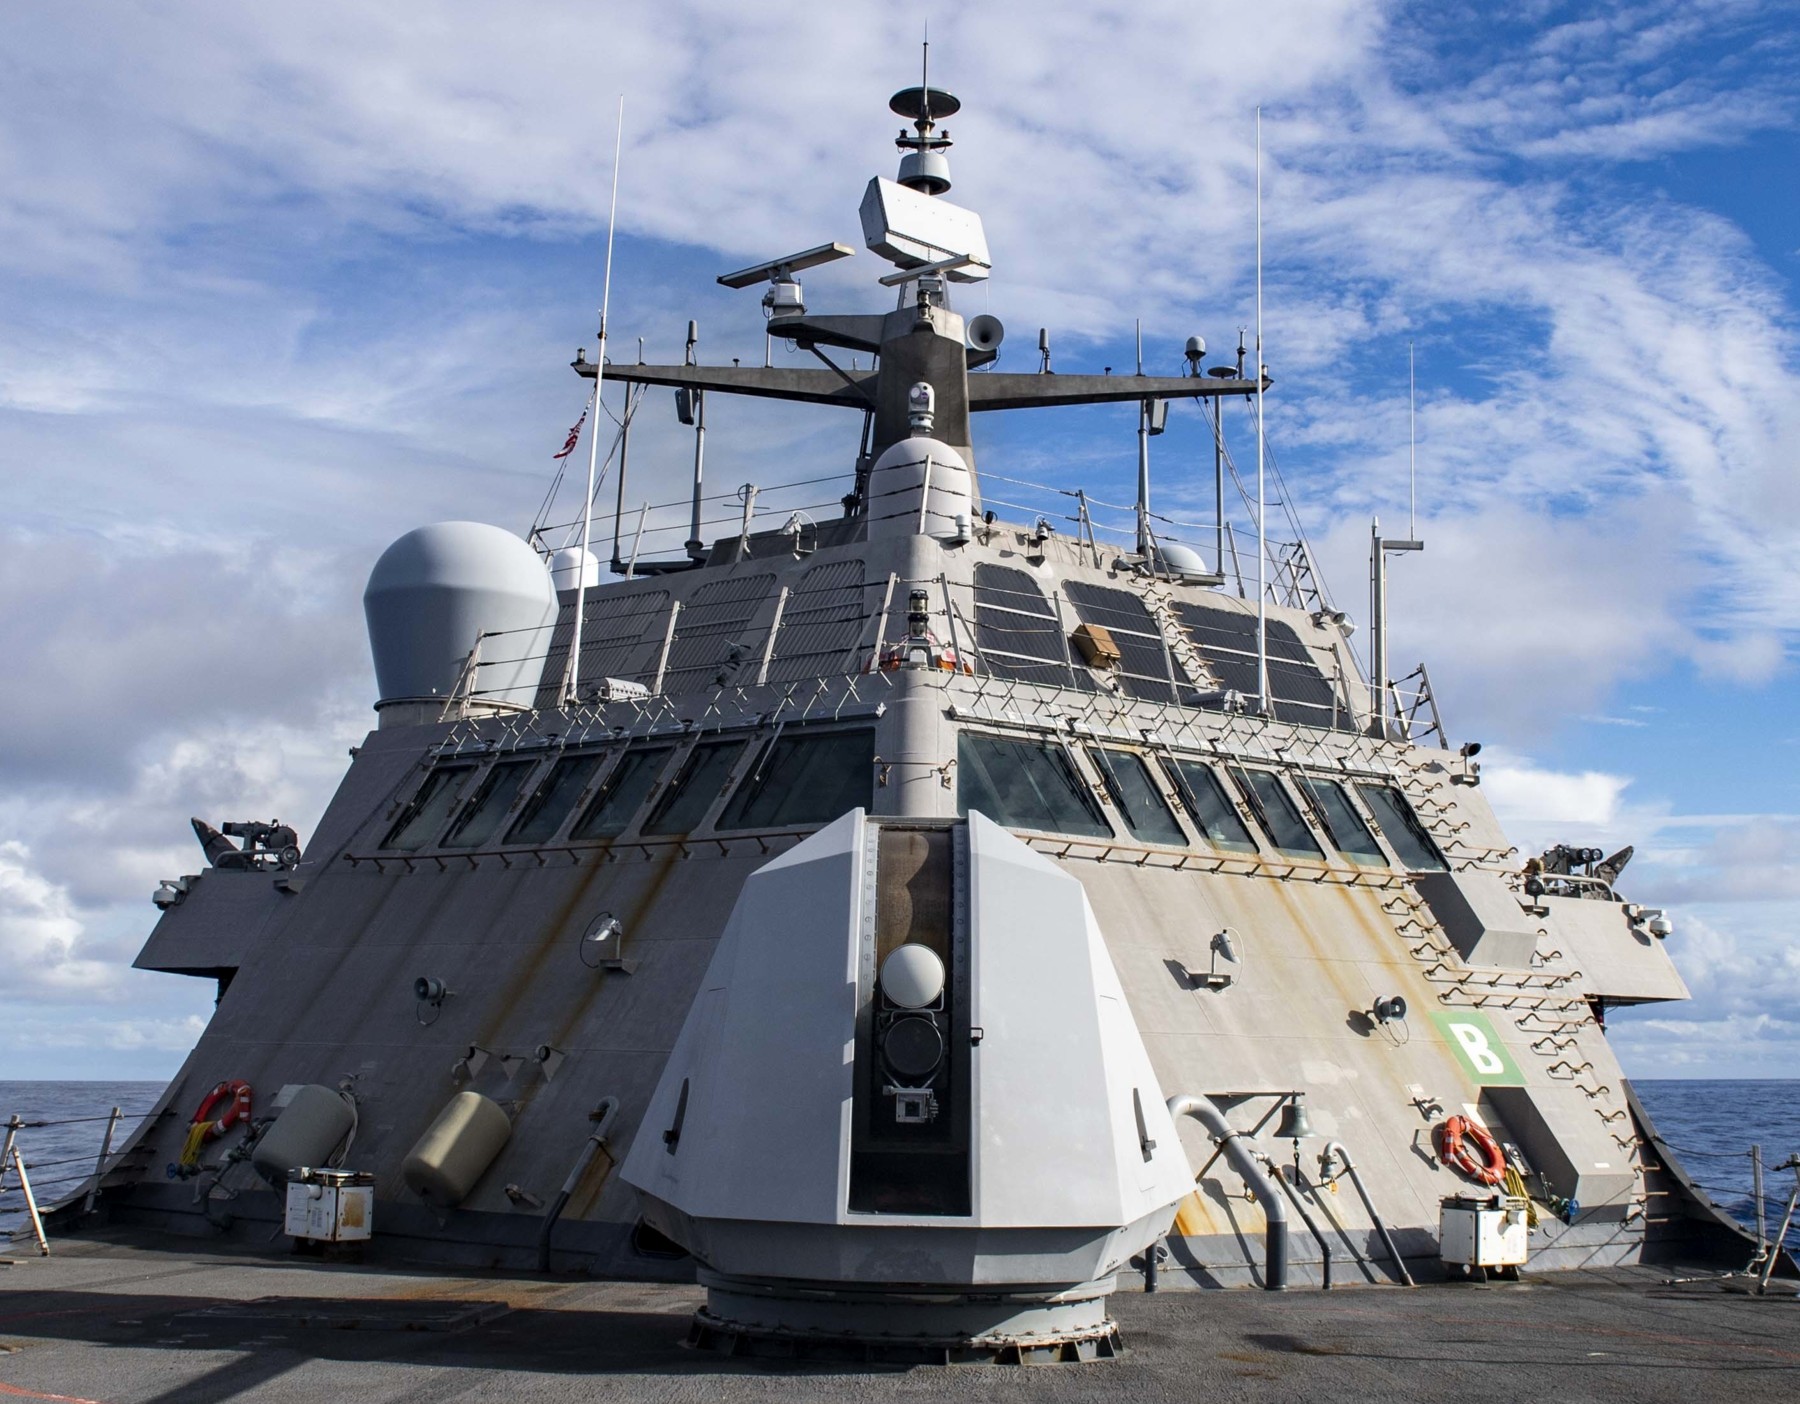 lcs-7 uss detroit freedom class littoral combat ship us navy 47 atlantic ocean